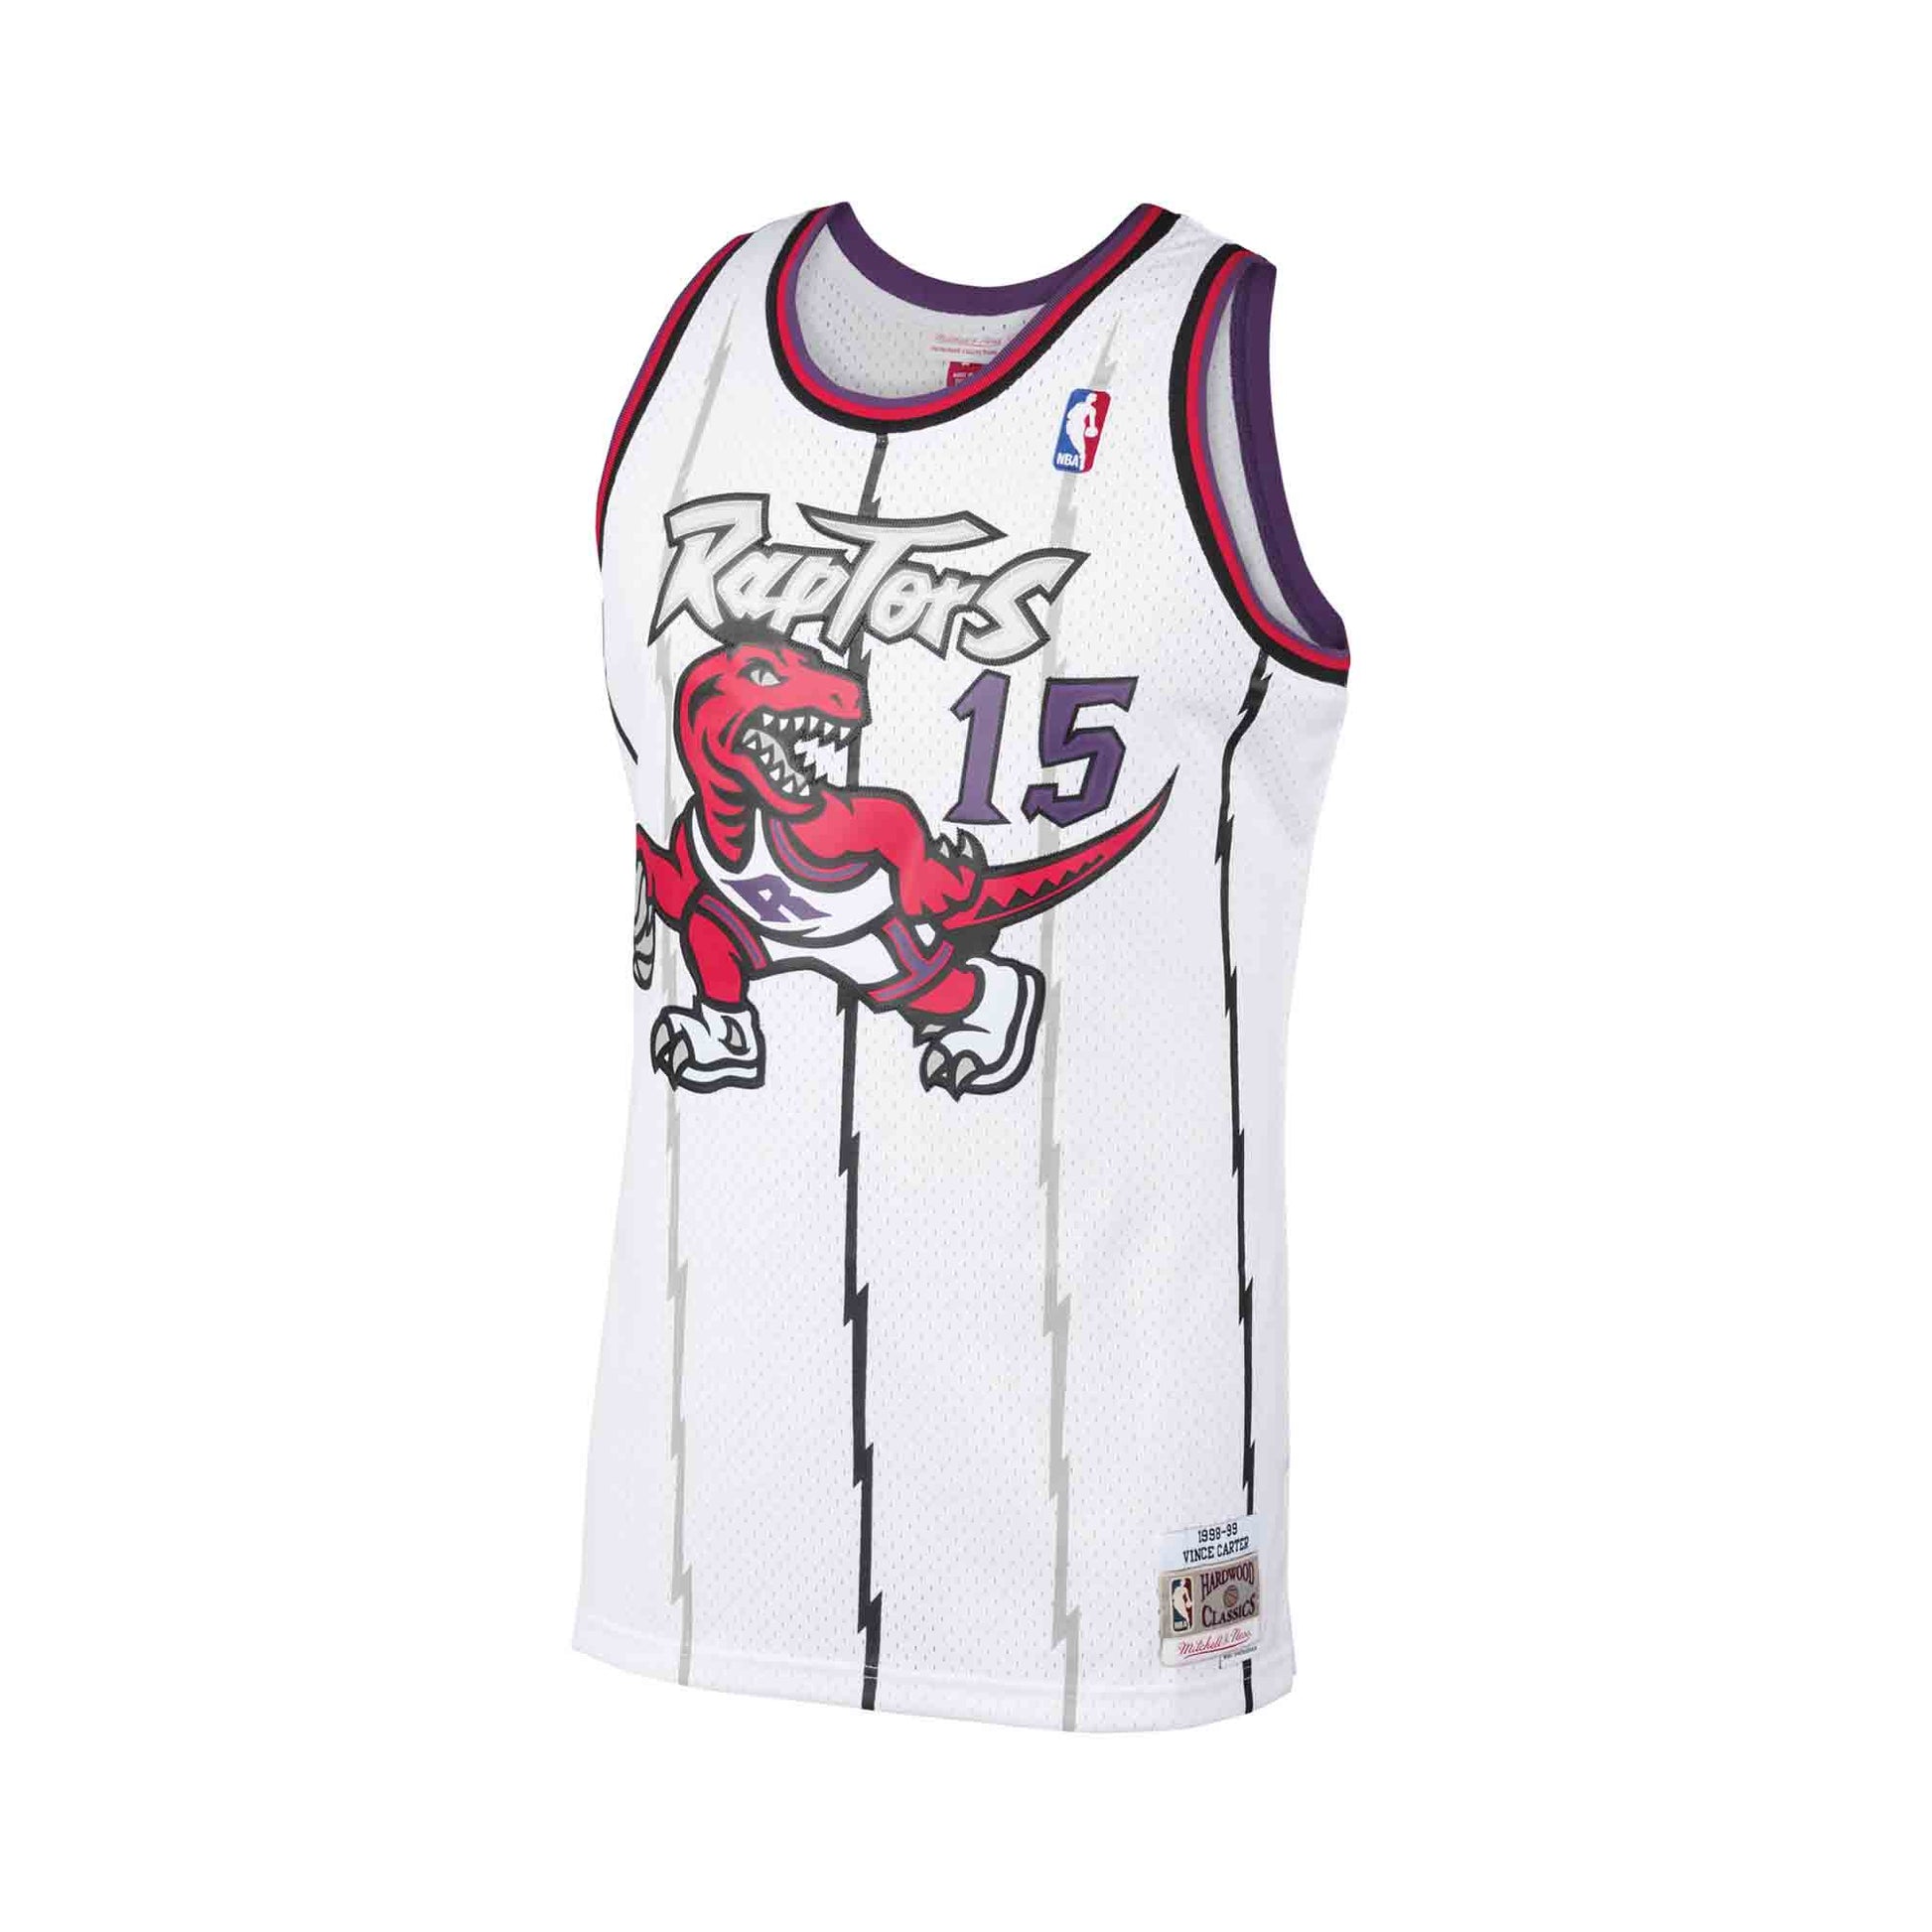 Toronto Raptors #15 Vince Carter Retro Jersey 1998-99